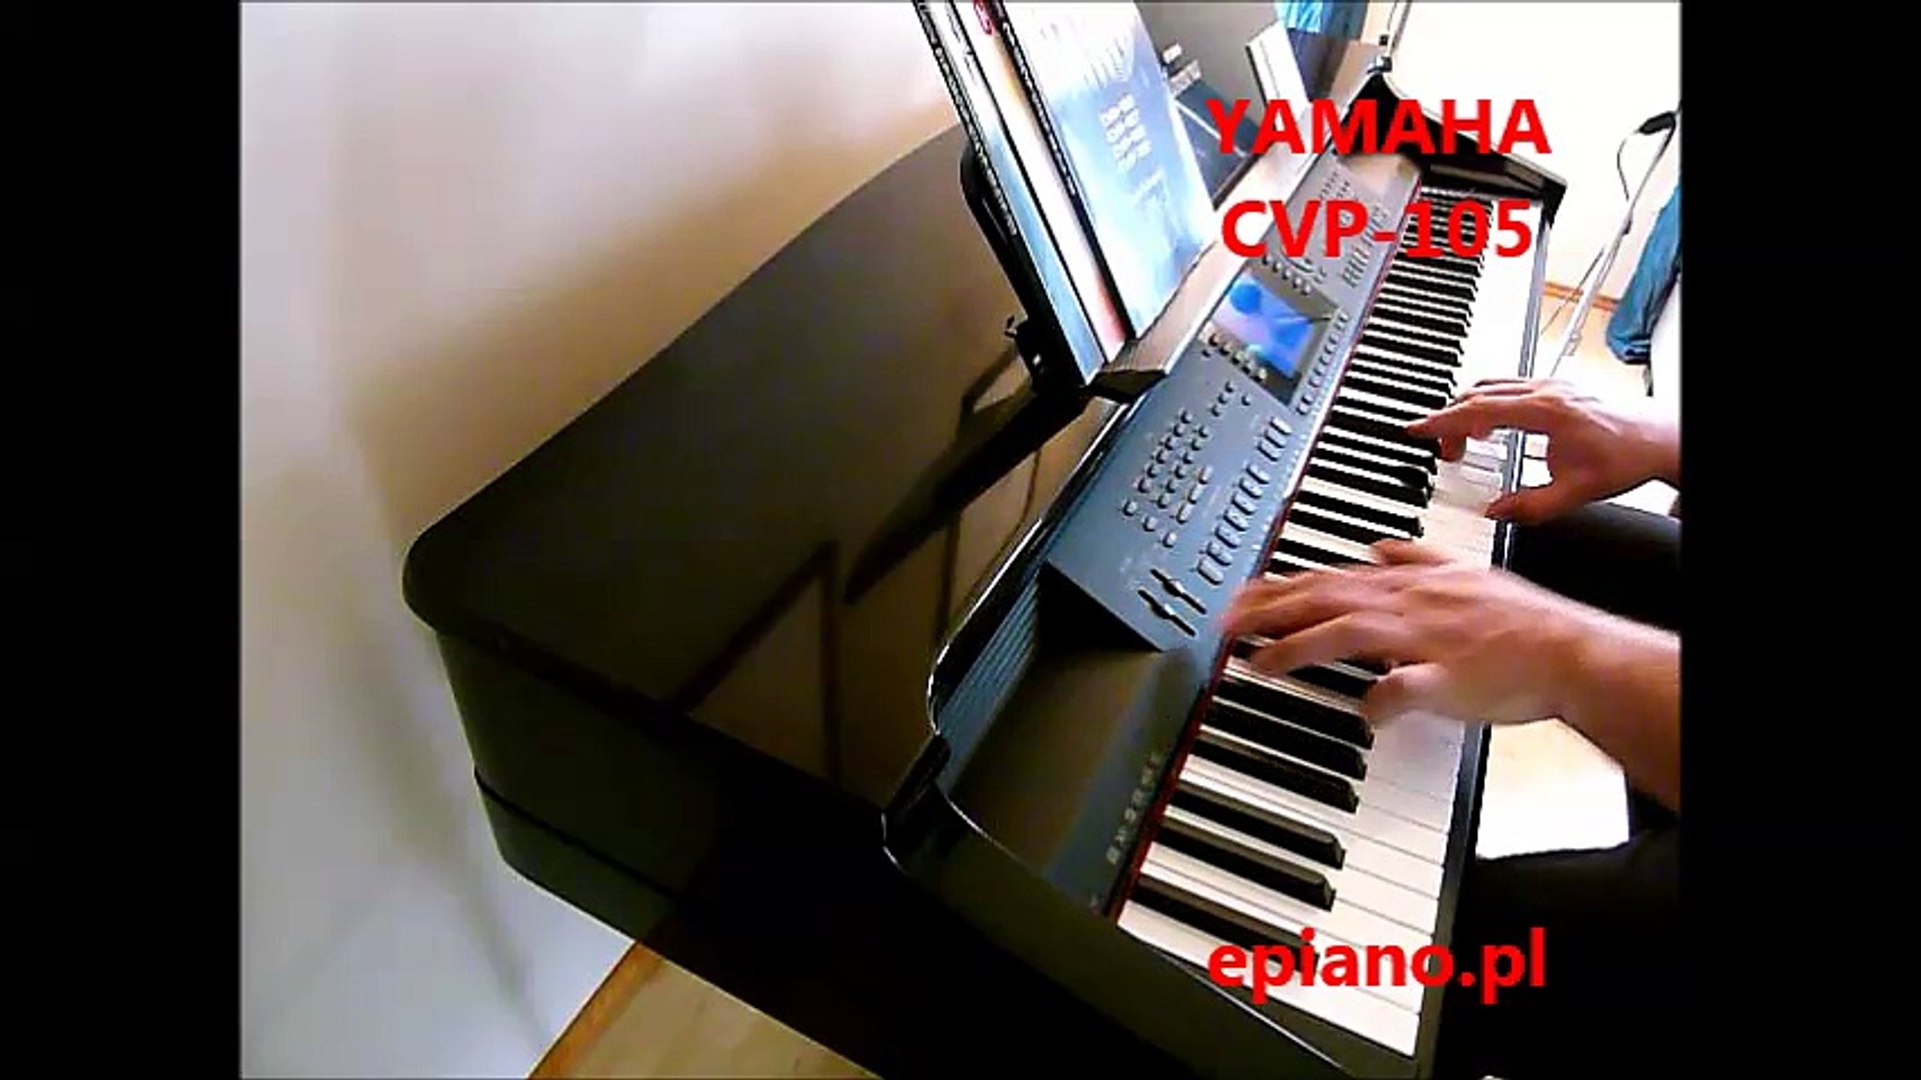 Yamaha cvp-105 usb - video Dailymotion